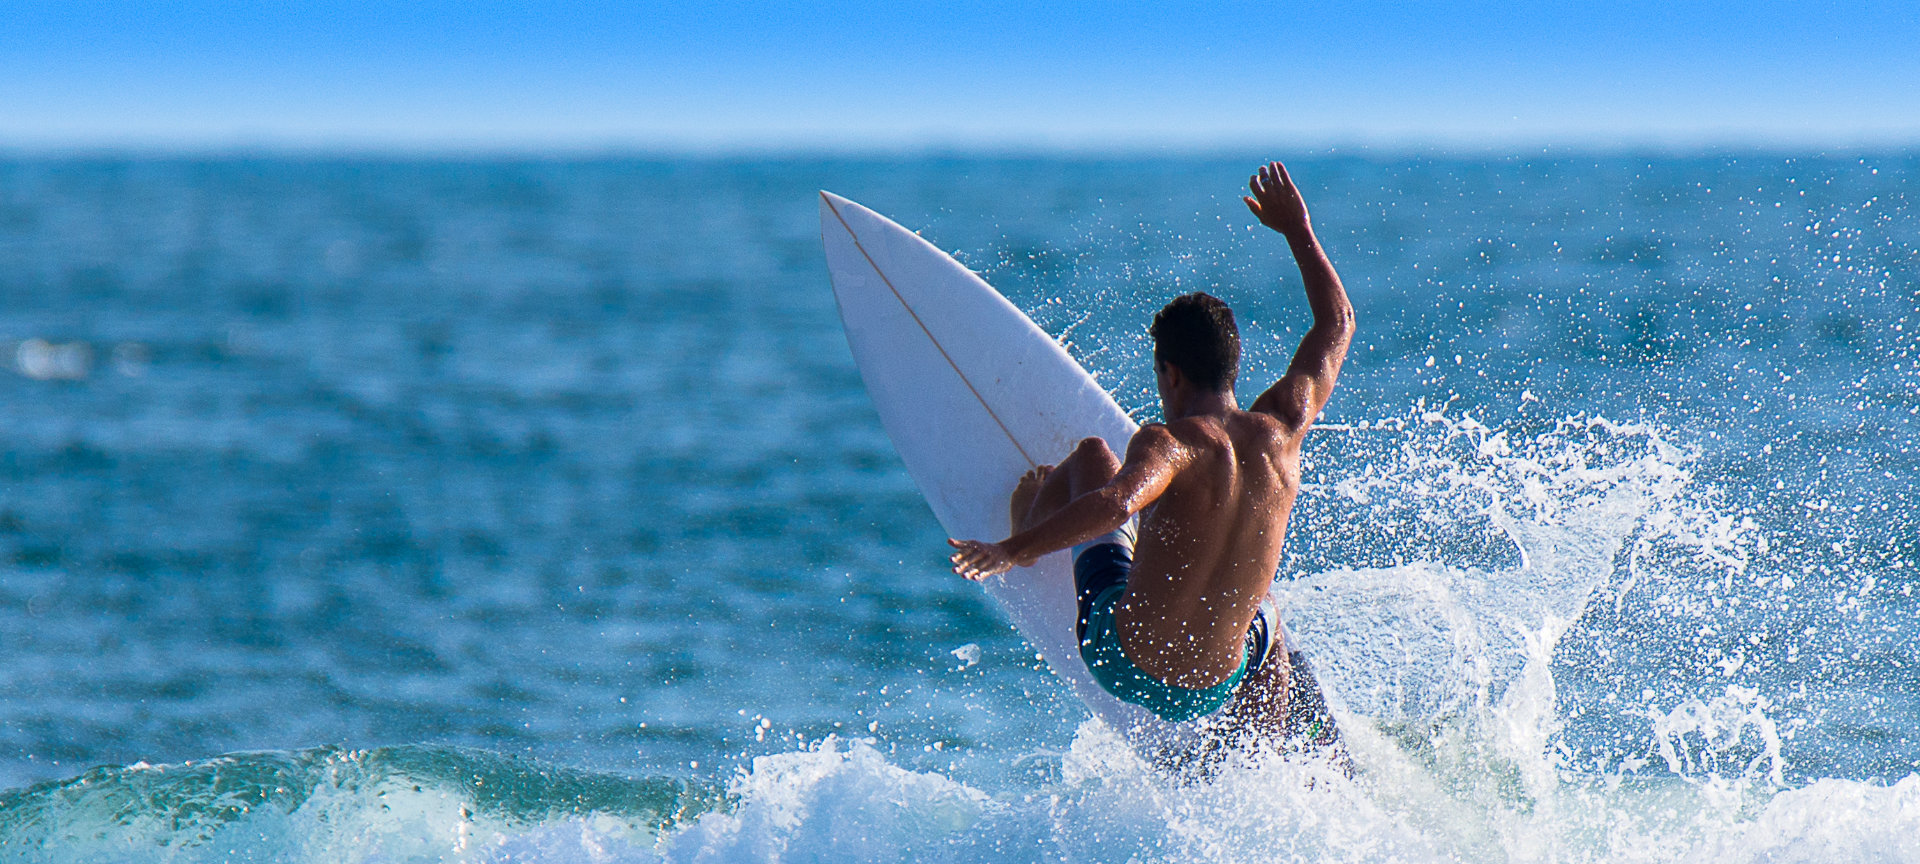 Surfista fazendo manobras na onda